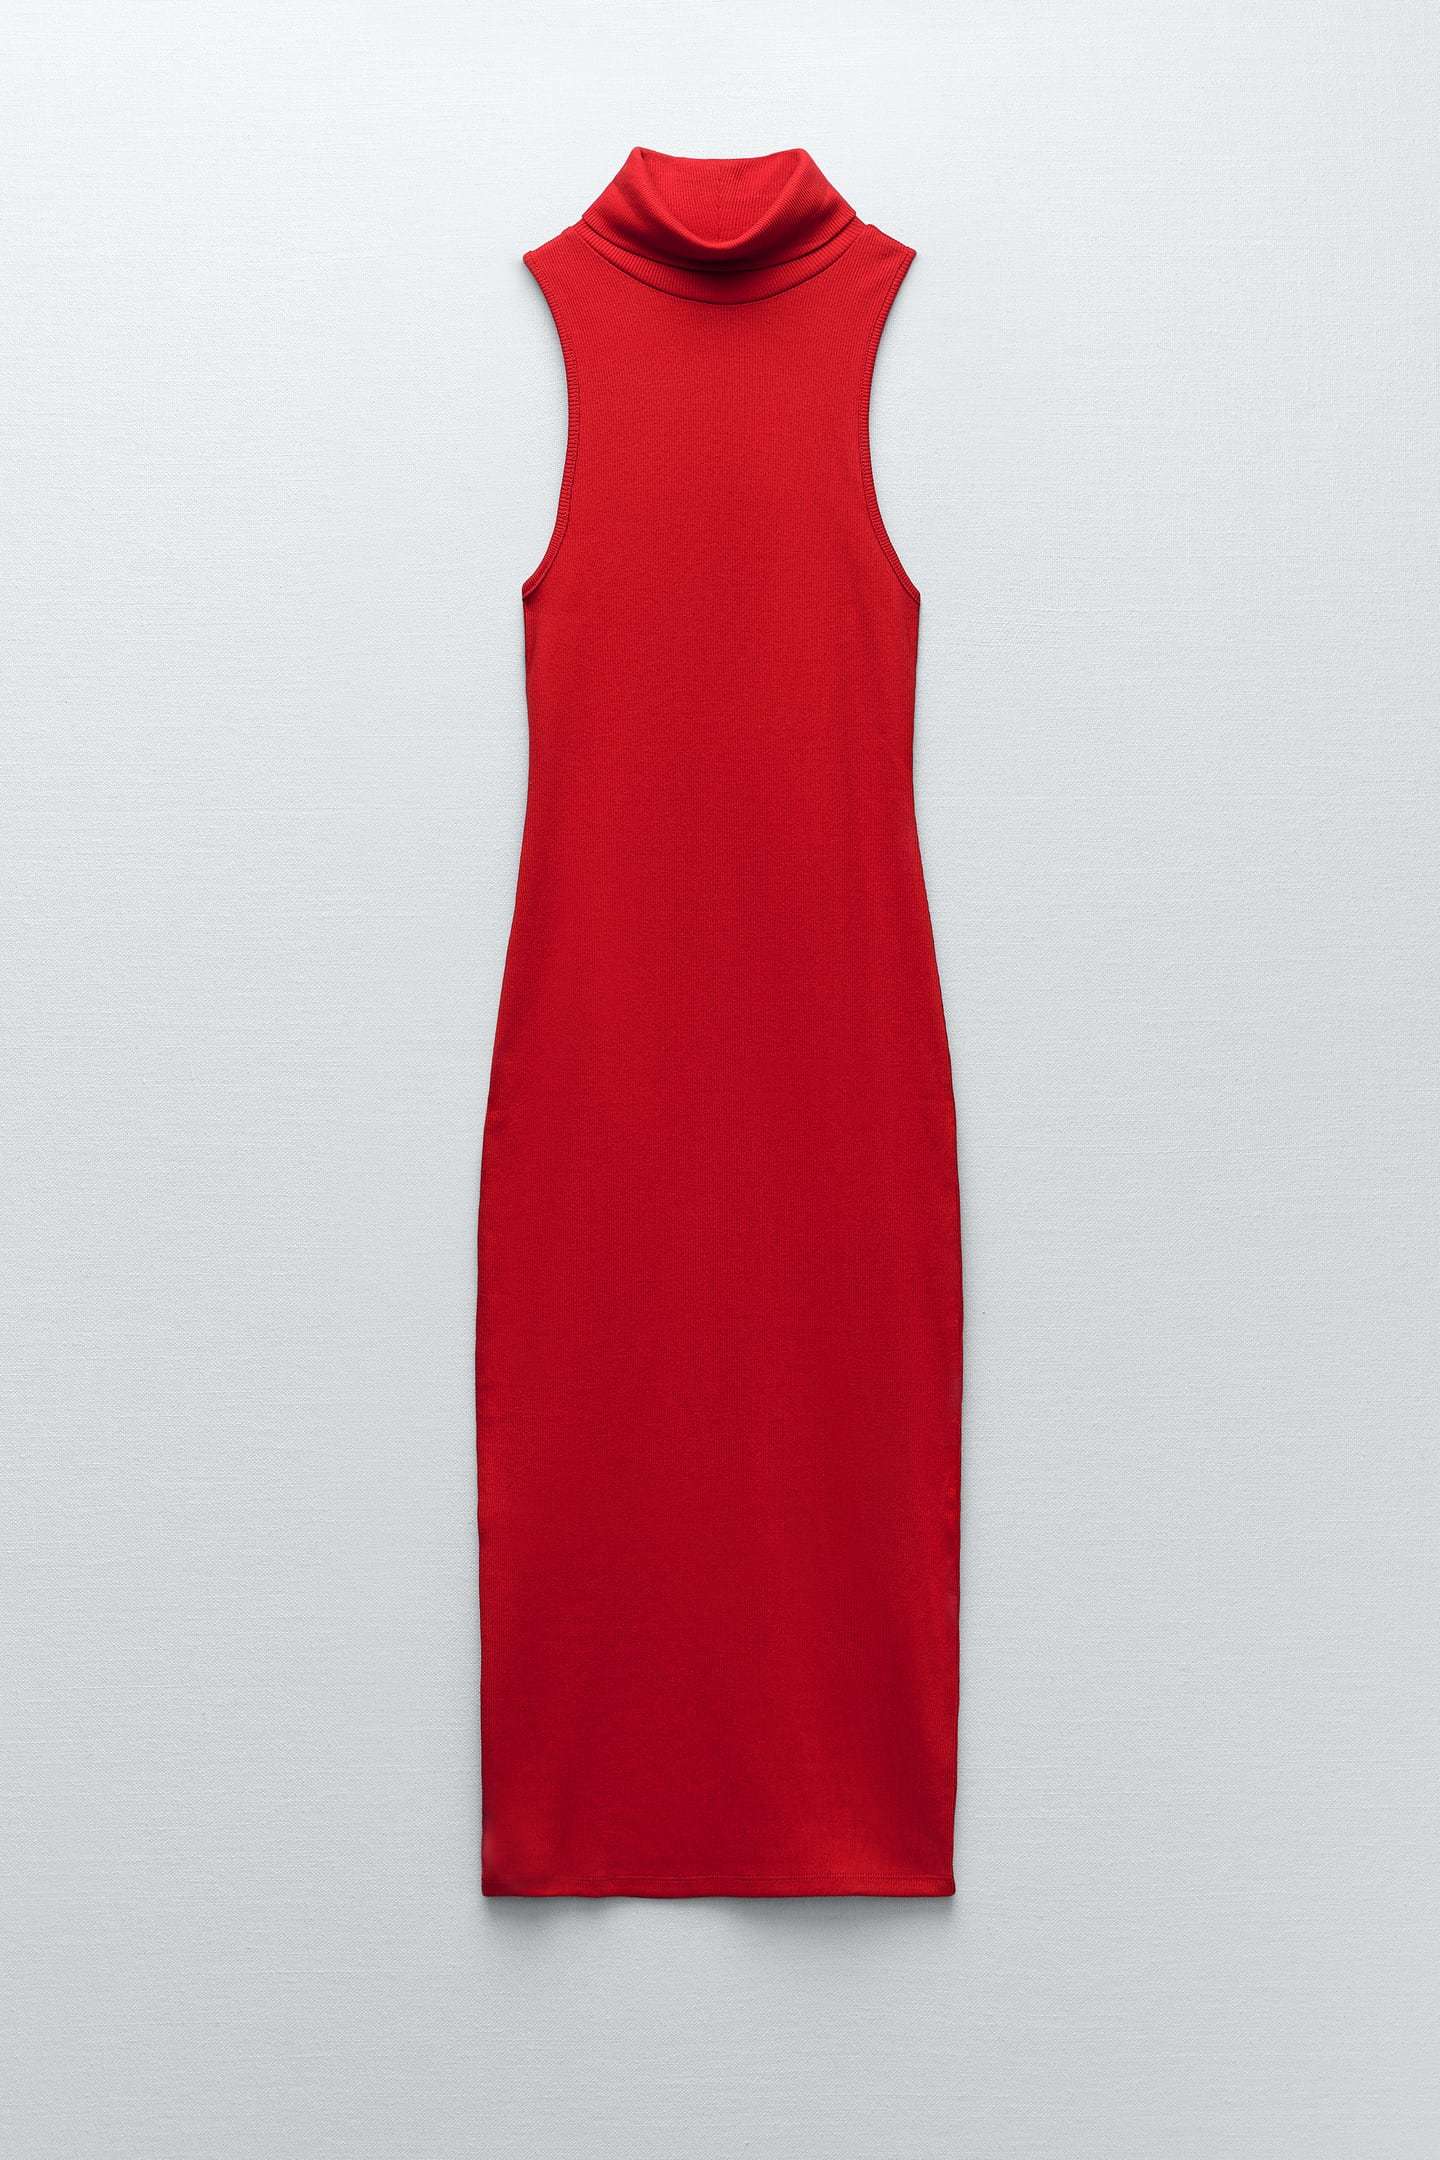 Vestido rojo de Zara.